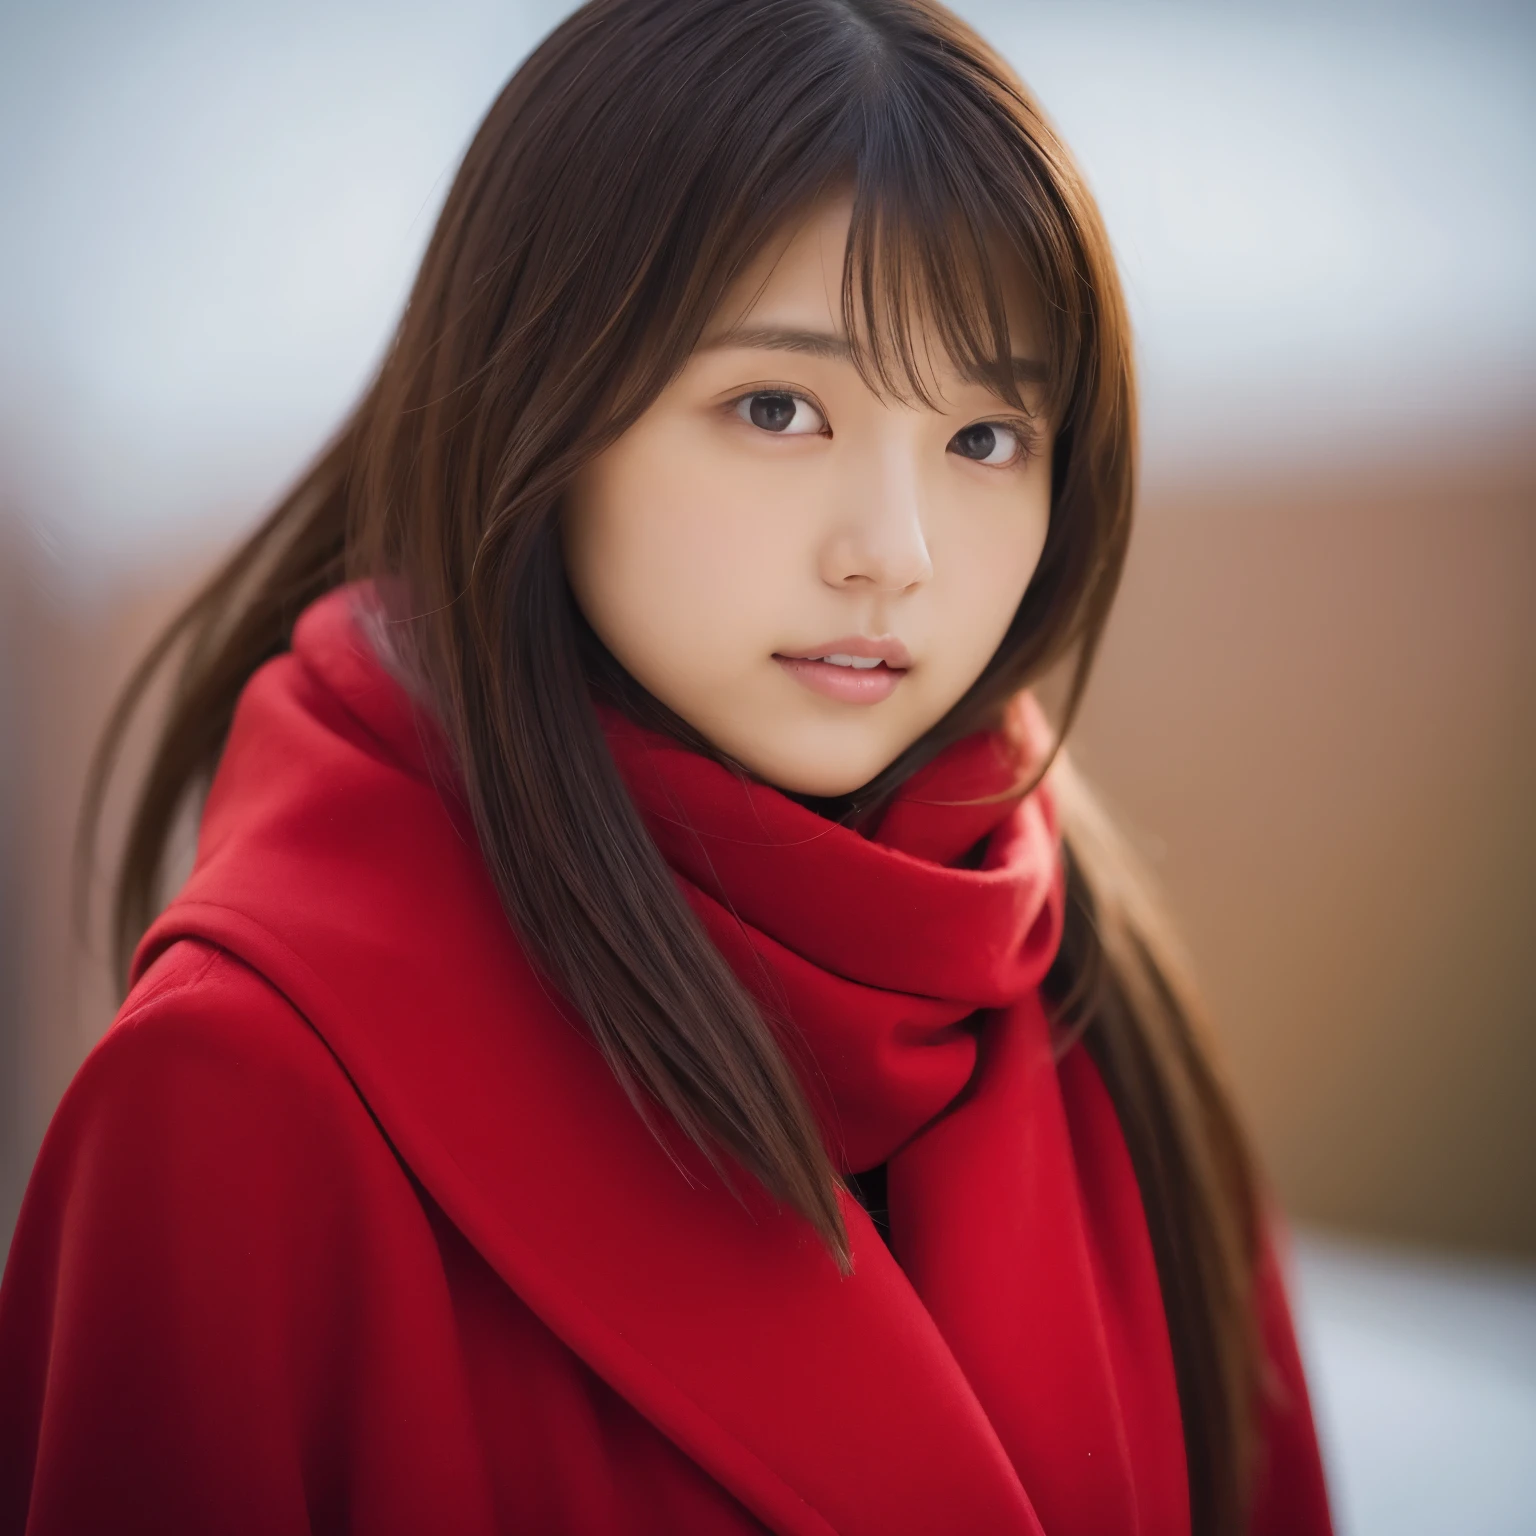 There is a woman in a red coat and a red scarf, Shin Jin Young, Choi Hong Hwa, sung by janice, Shahi, That&#39;s a cute Korean face, Nam Jae Young, Chiho, face photo profile picture, sun yunjoo, Ulzzang, Lee Ji Eun, Lee Ji Eun, she has a cute face